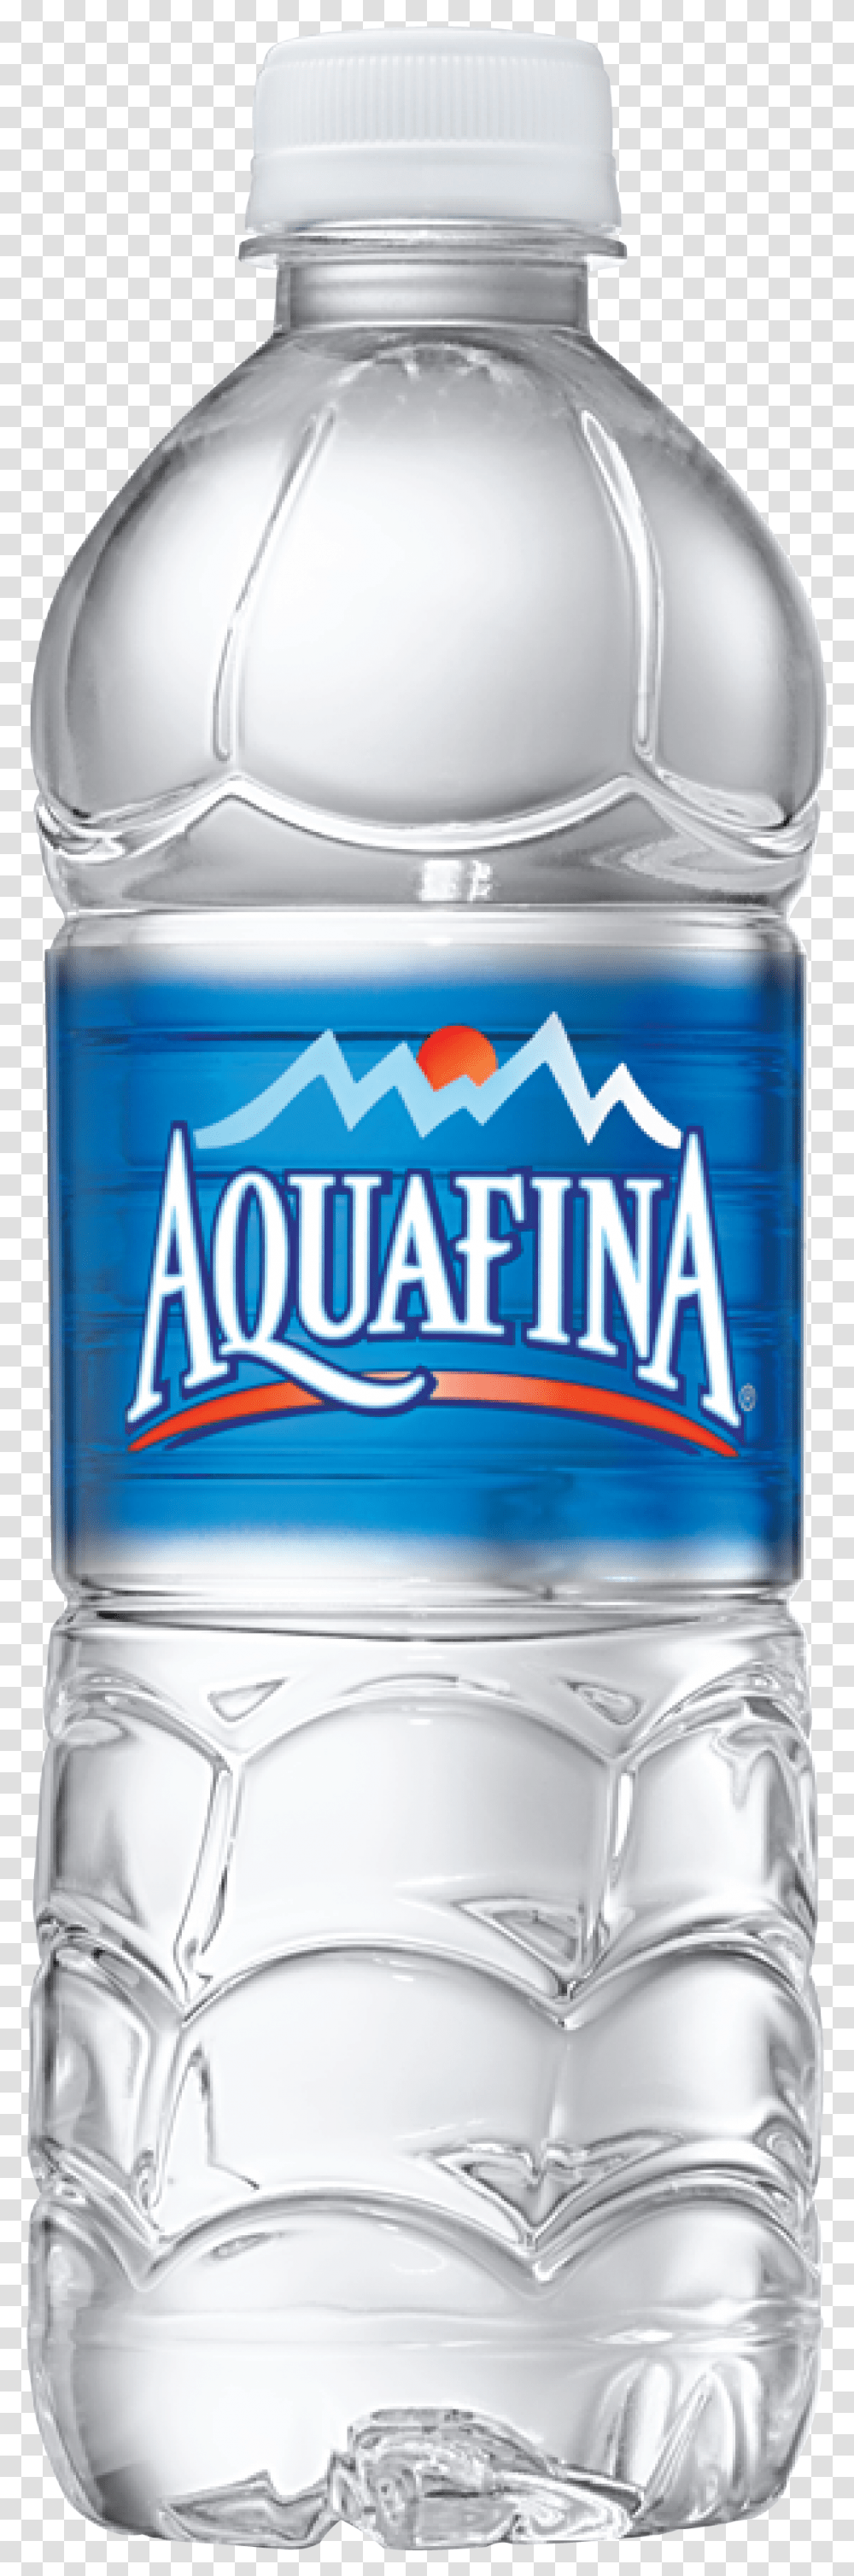 Aquafina Logo Plastic Aquafina Water Bottle, Beverage, Drink, Mineral Water, Fire Hydrant Transparent Png